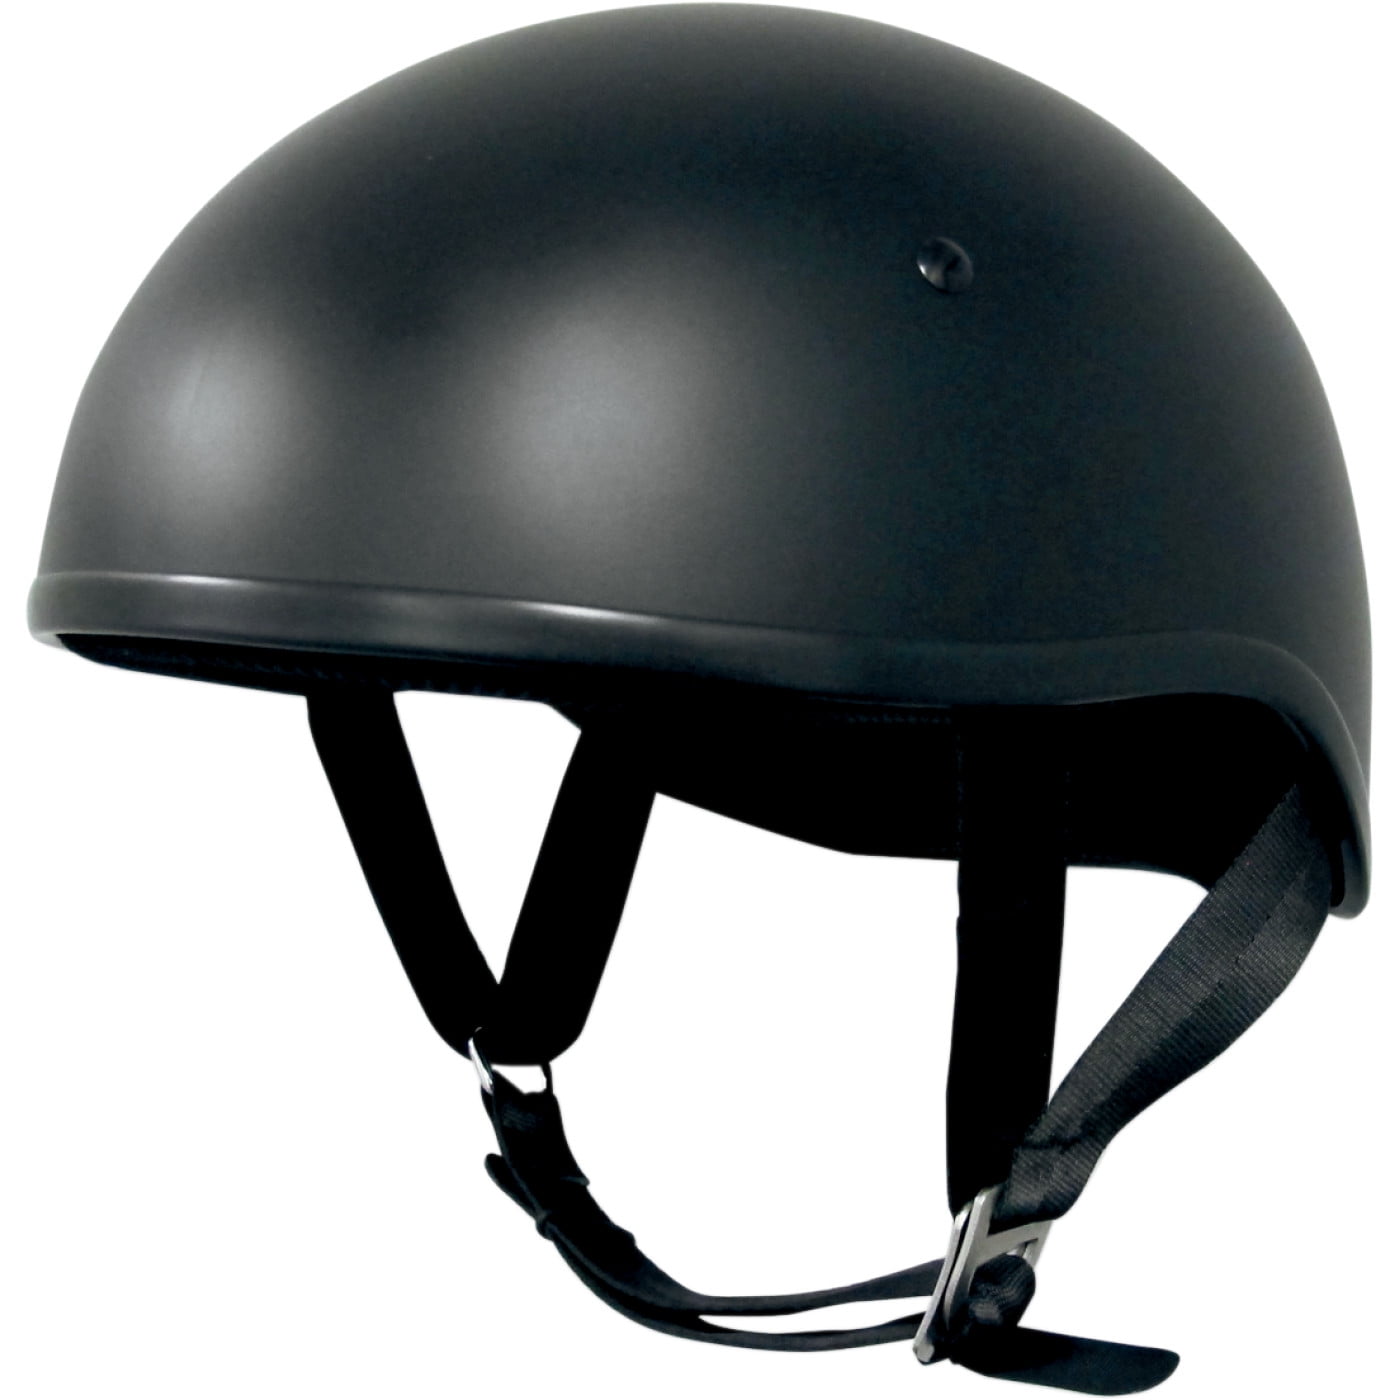 AFX Helmet Ear Cover Set for FX-200 Size Lg-2XL 